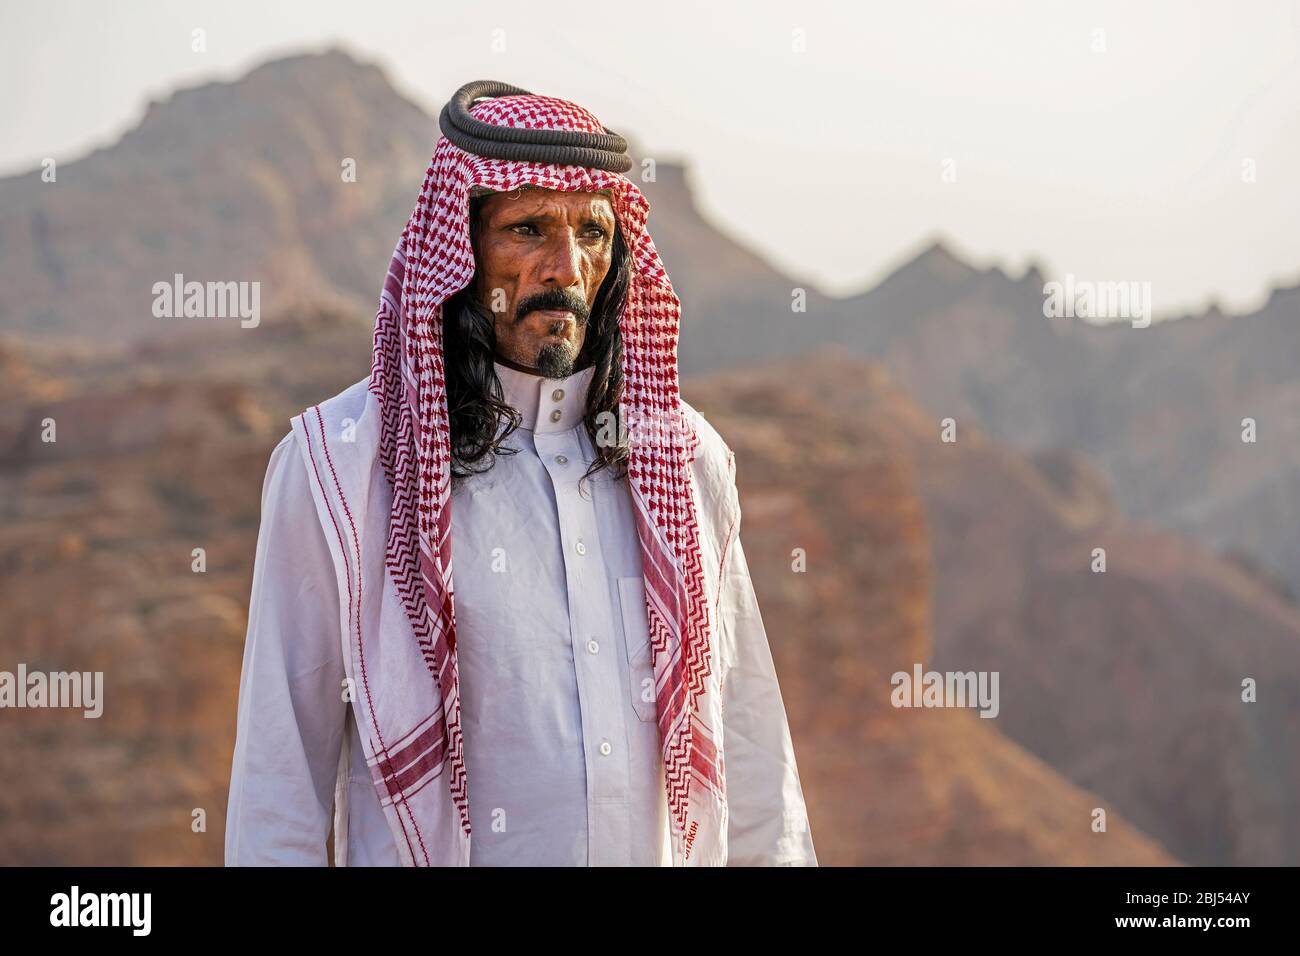 A Bedouin man looks out across his mountainous desert home in Jordan. Stock Photo